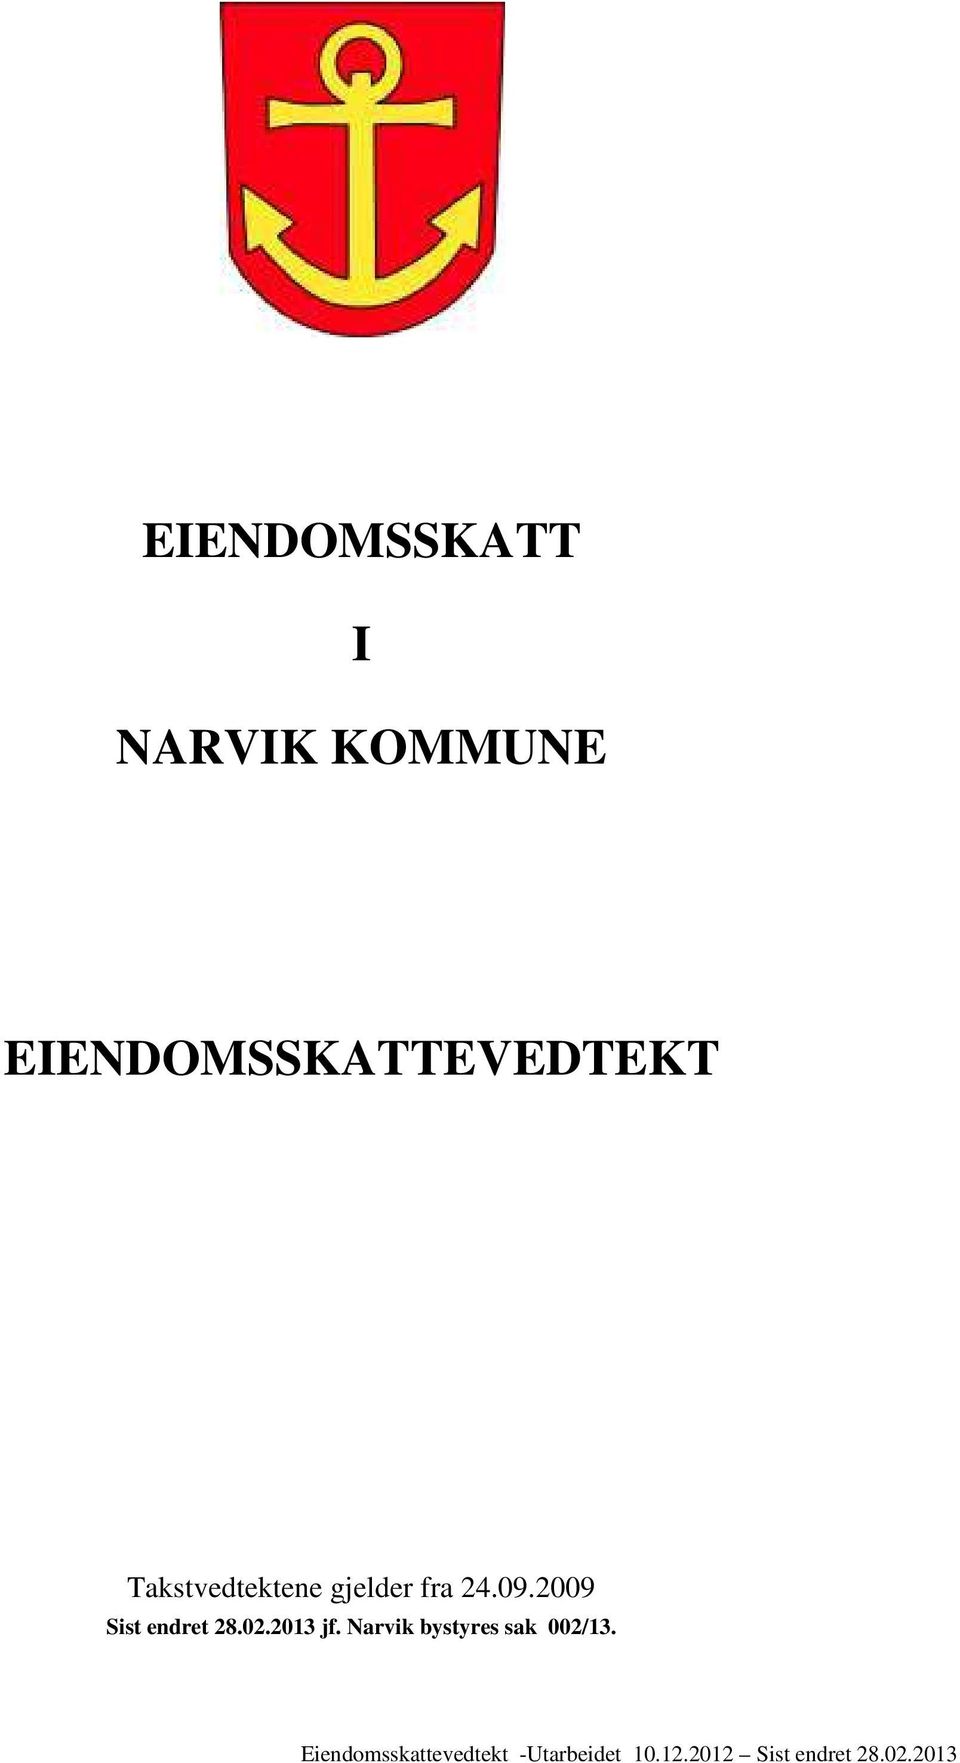 02.2013 jf. Narvik bystyres sak 002/13.